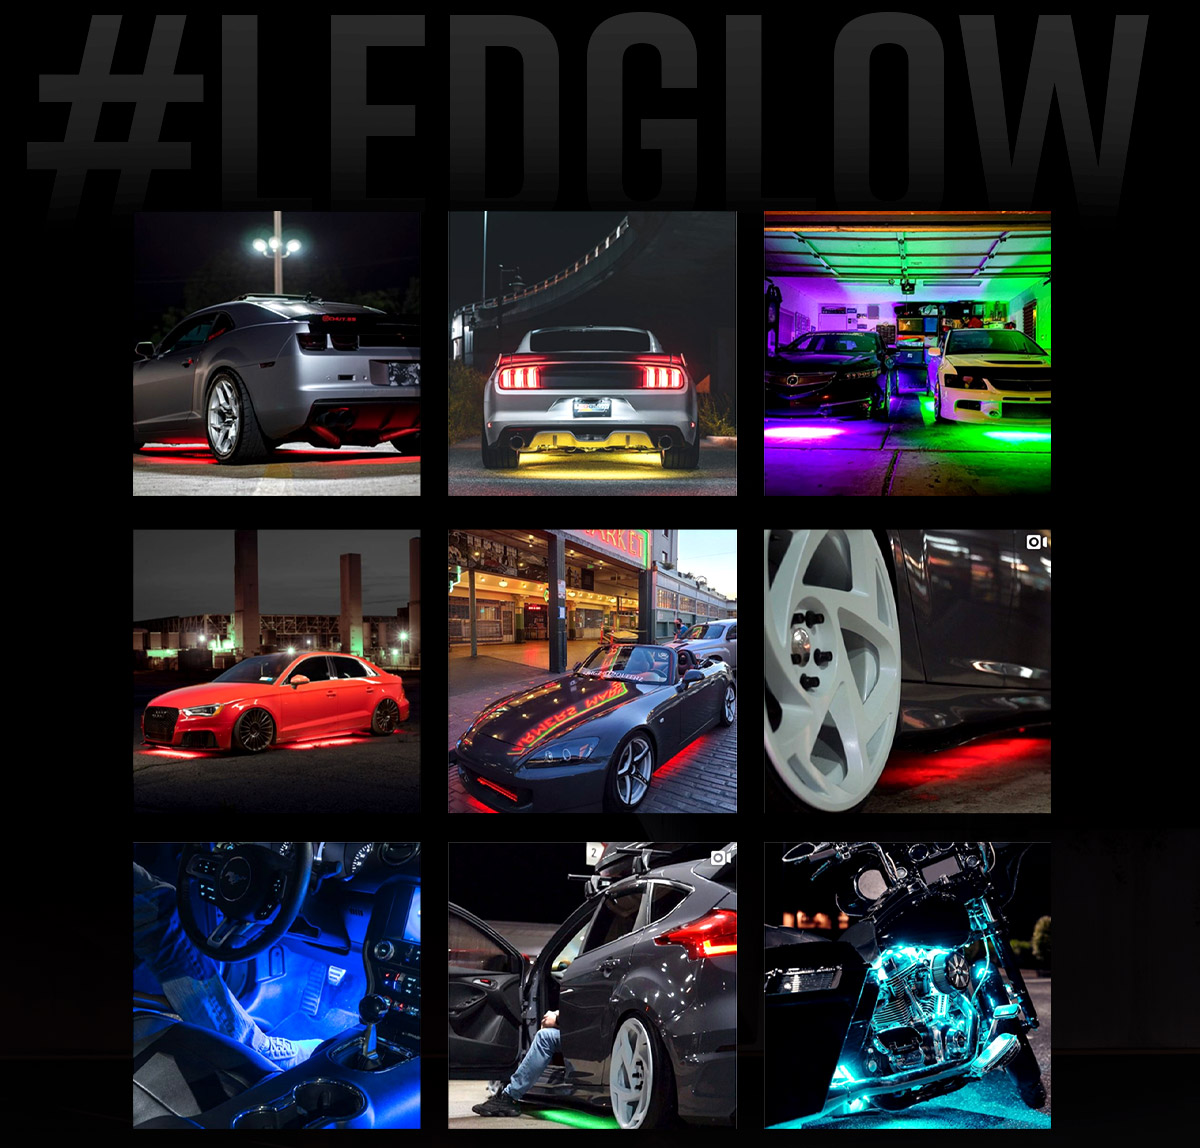 LEDGlow Car Photos Collage